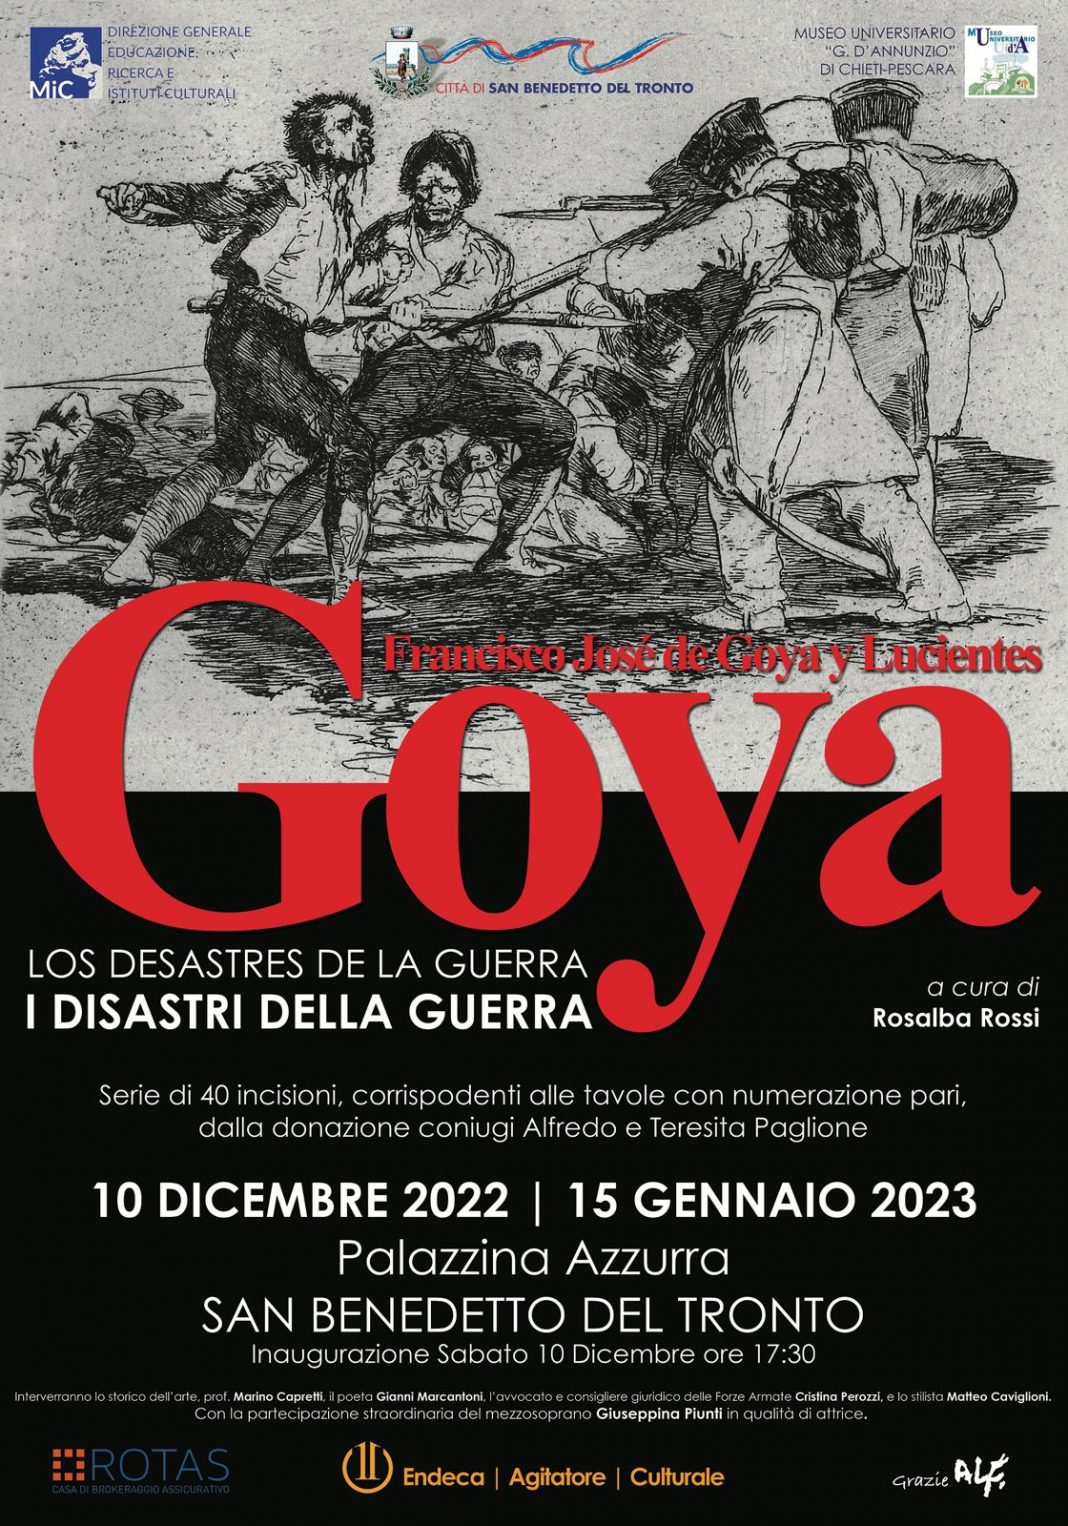 Goya –  Los Desastres de la Guerra (I Disastri della Guerra)https://www.exibart.com/repository/media/formidable/11/img/2a5/MANIFESTO-1068x1526.jpg